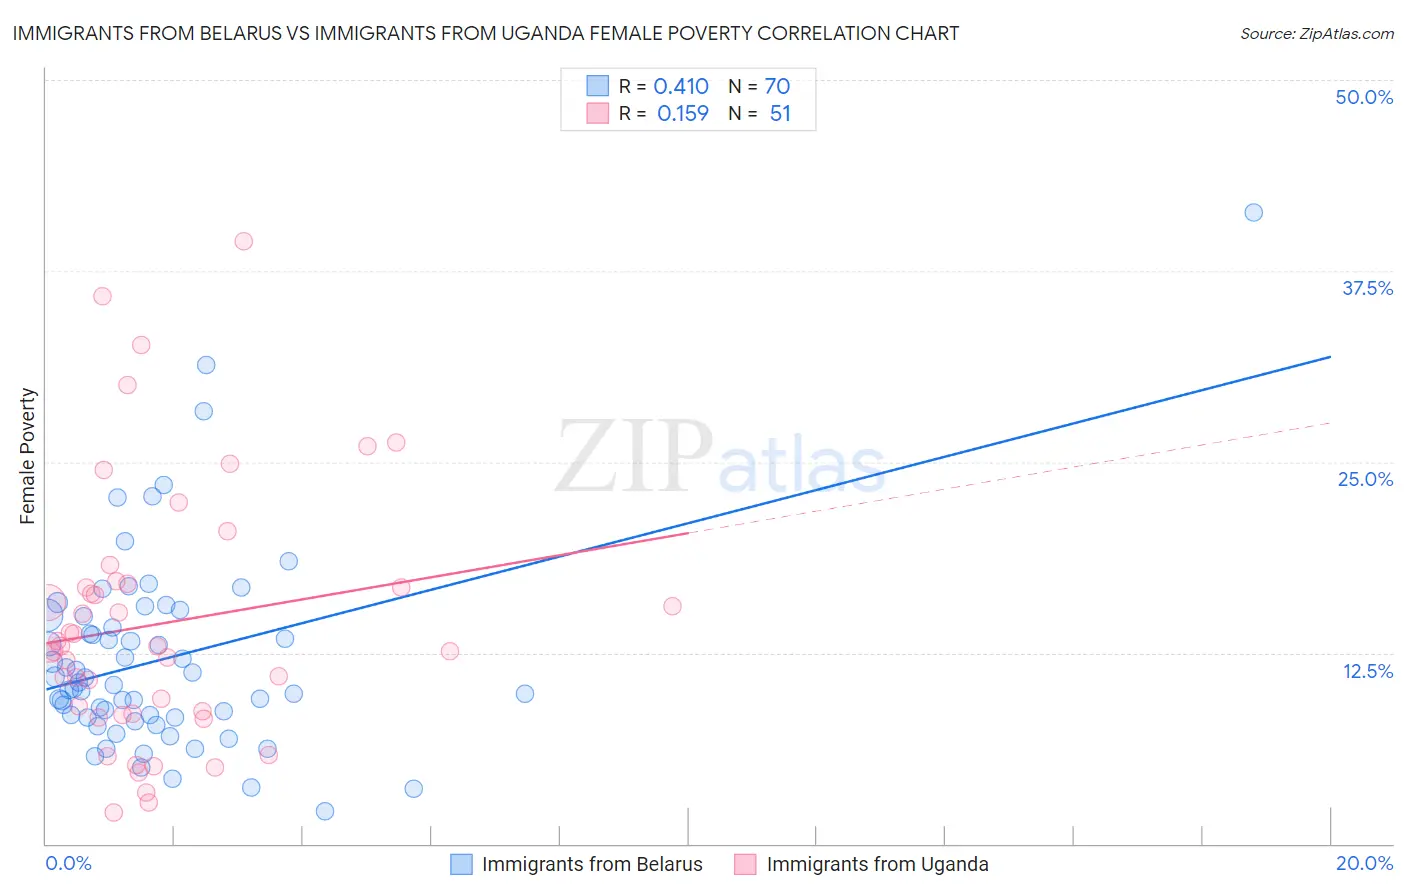 Immigrants from Belarus vs Immigrants from Uganda Female Poverty